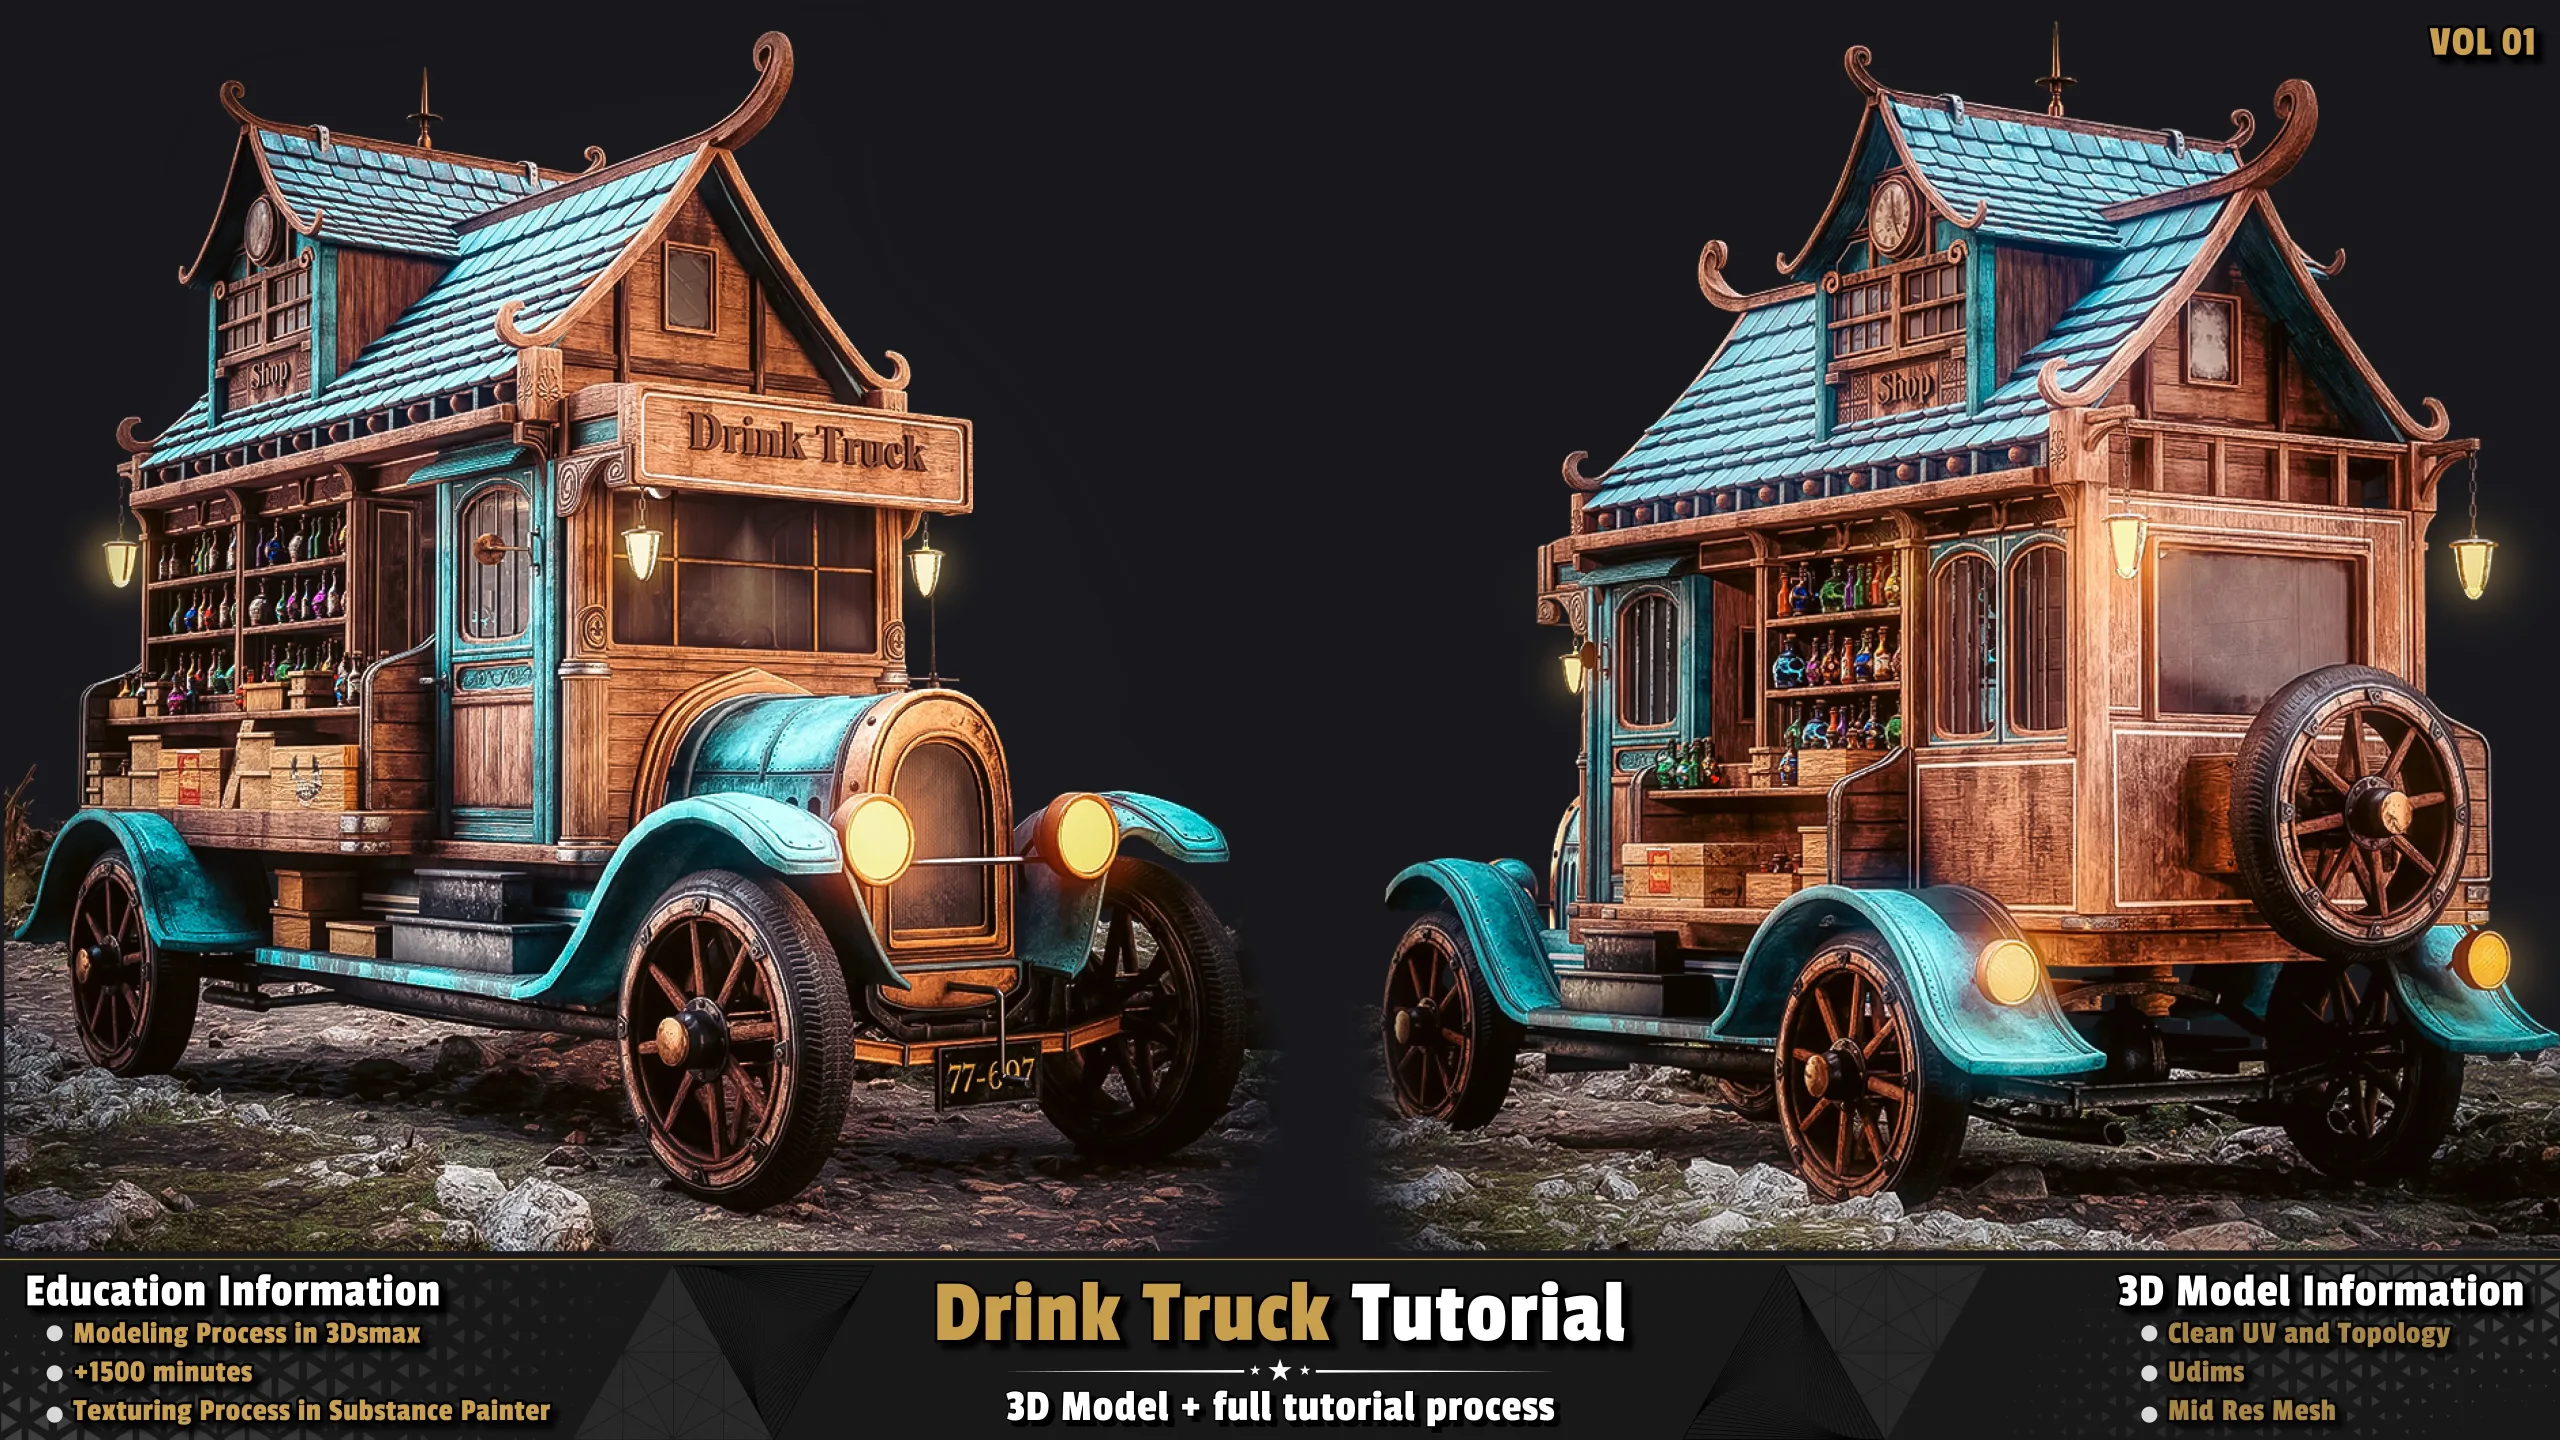 Drink Truck / 3D Model + Full Tutorial Process